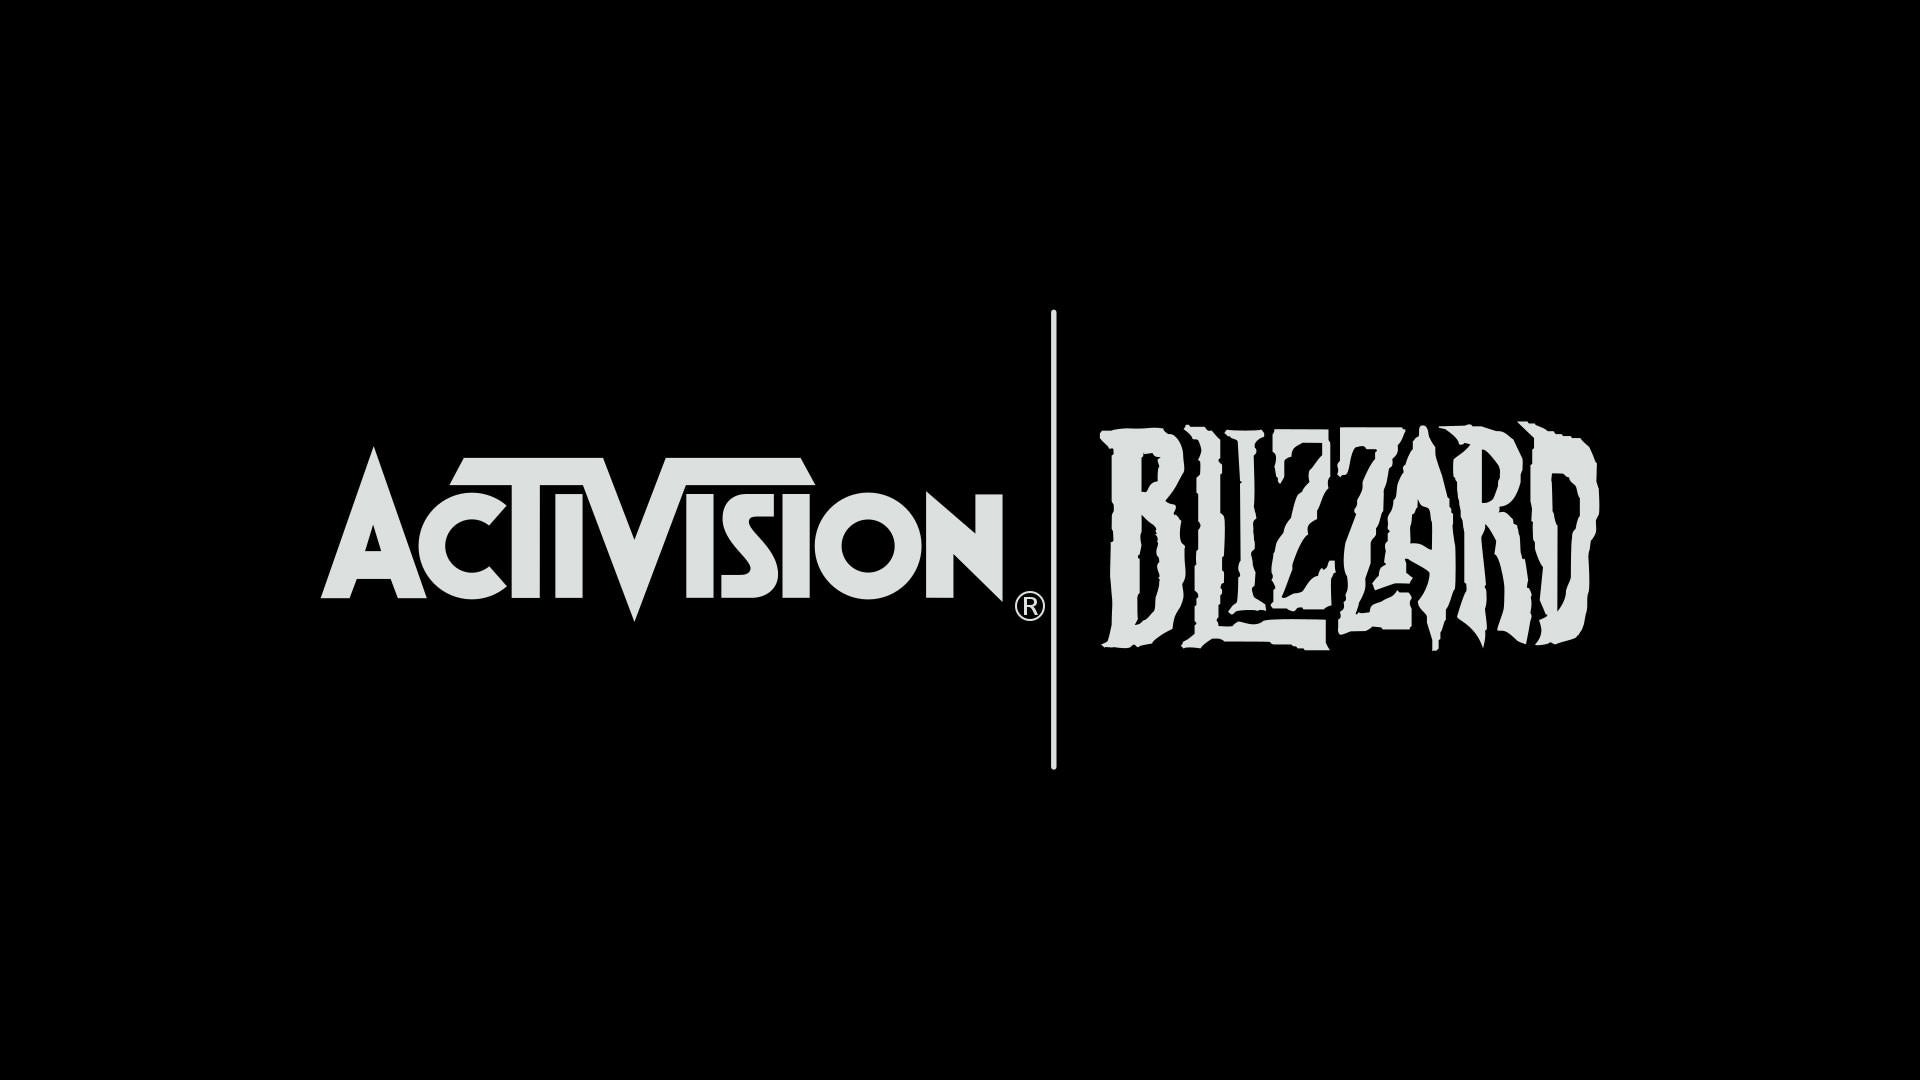 activision_blizzard_logos_black_bg_1.jpg